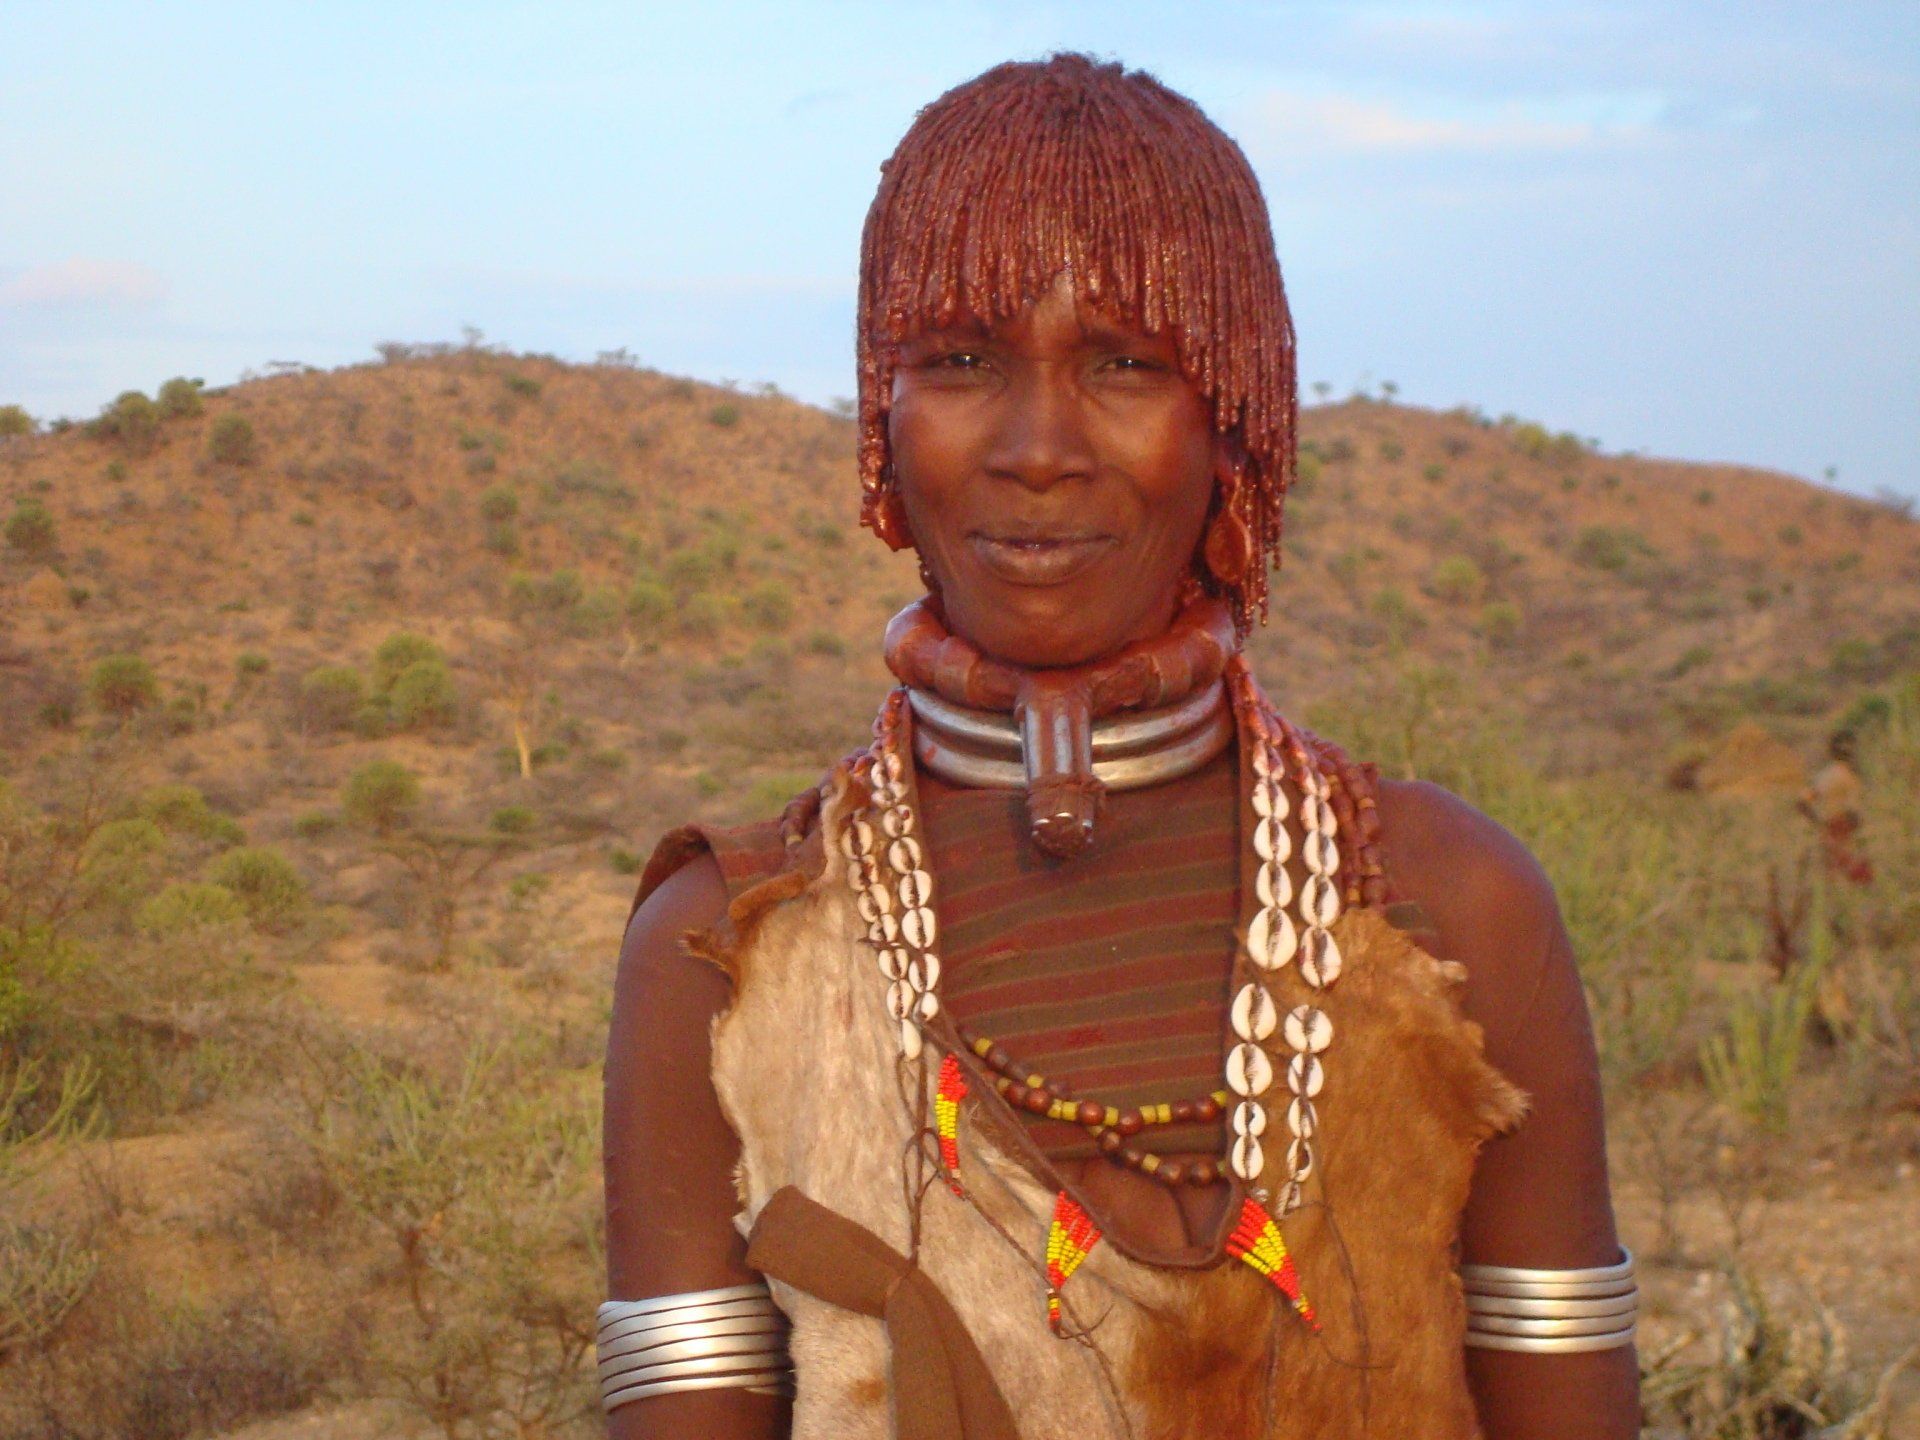 Ethiopian woman from the Omo region.